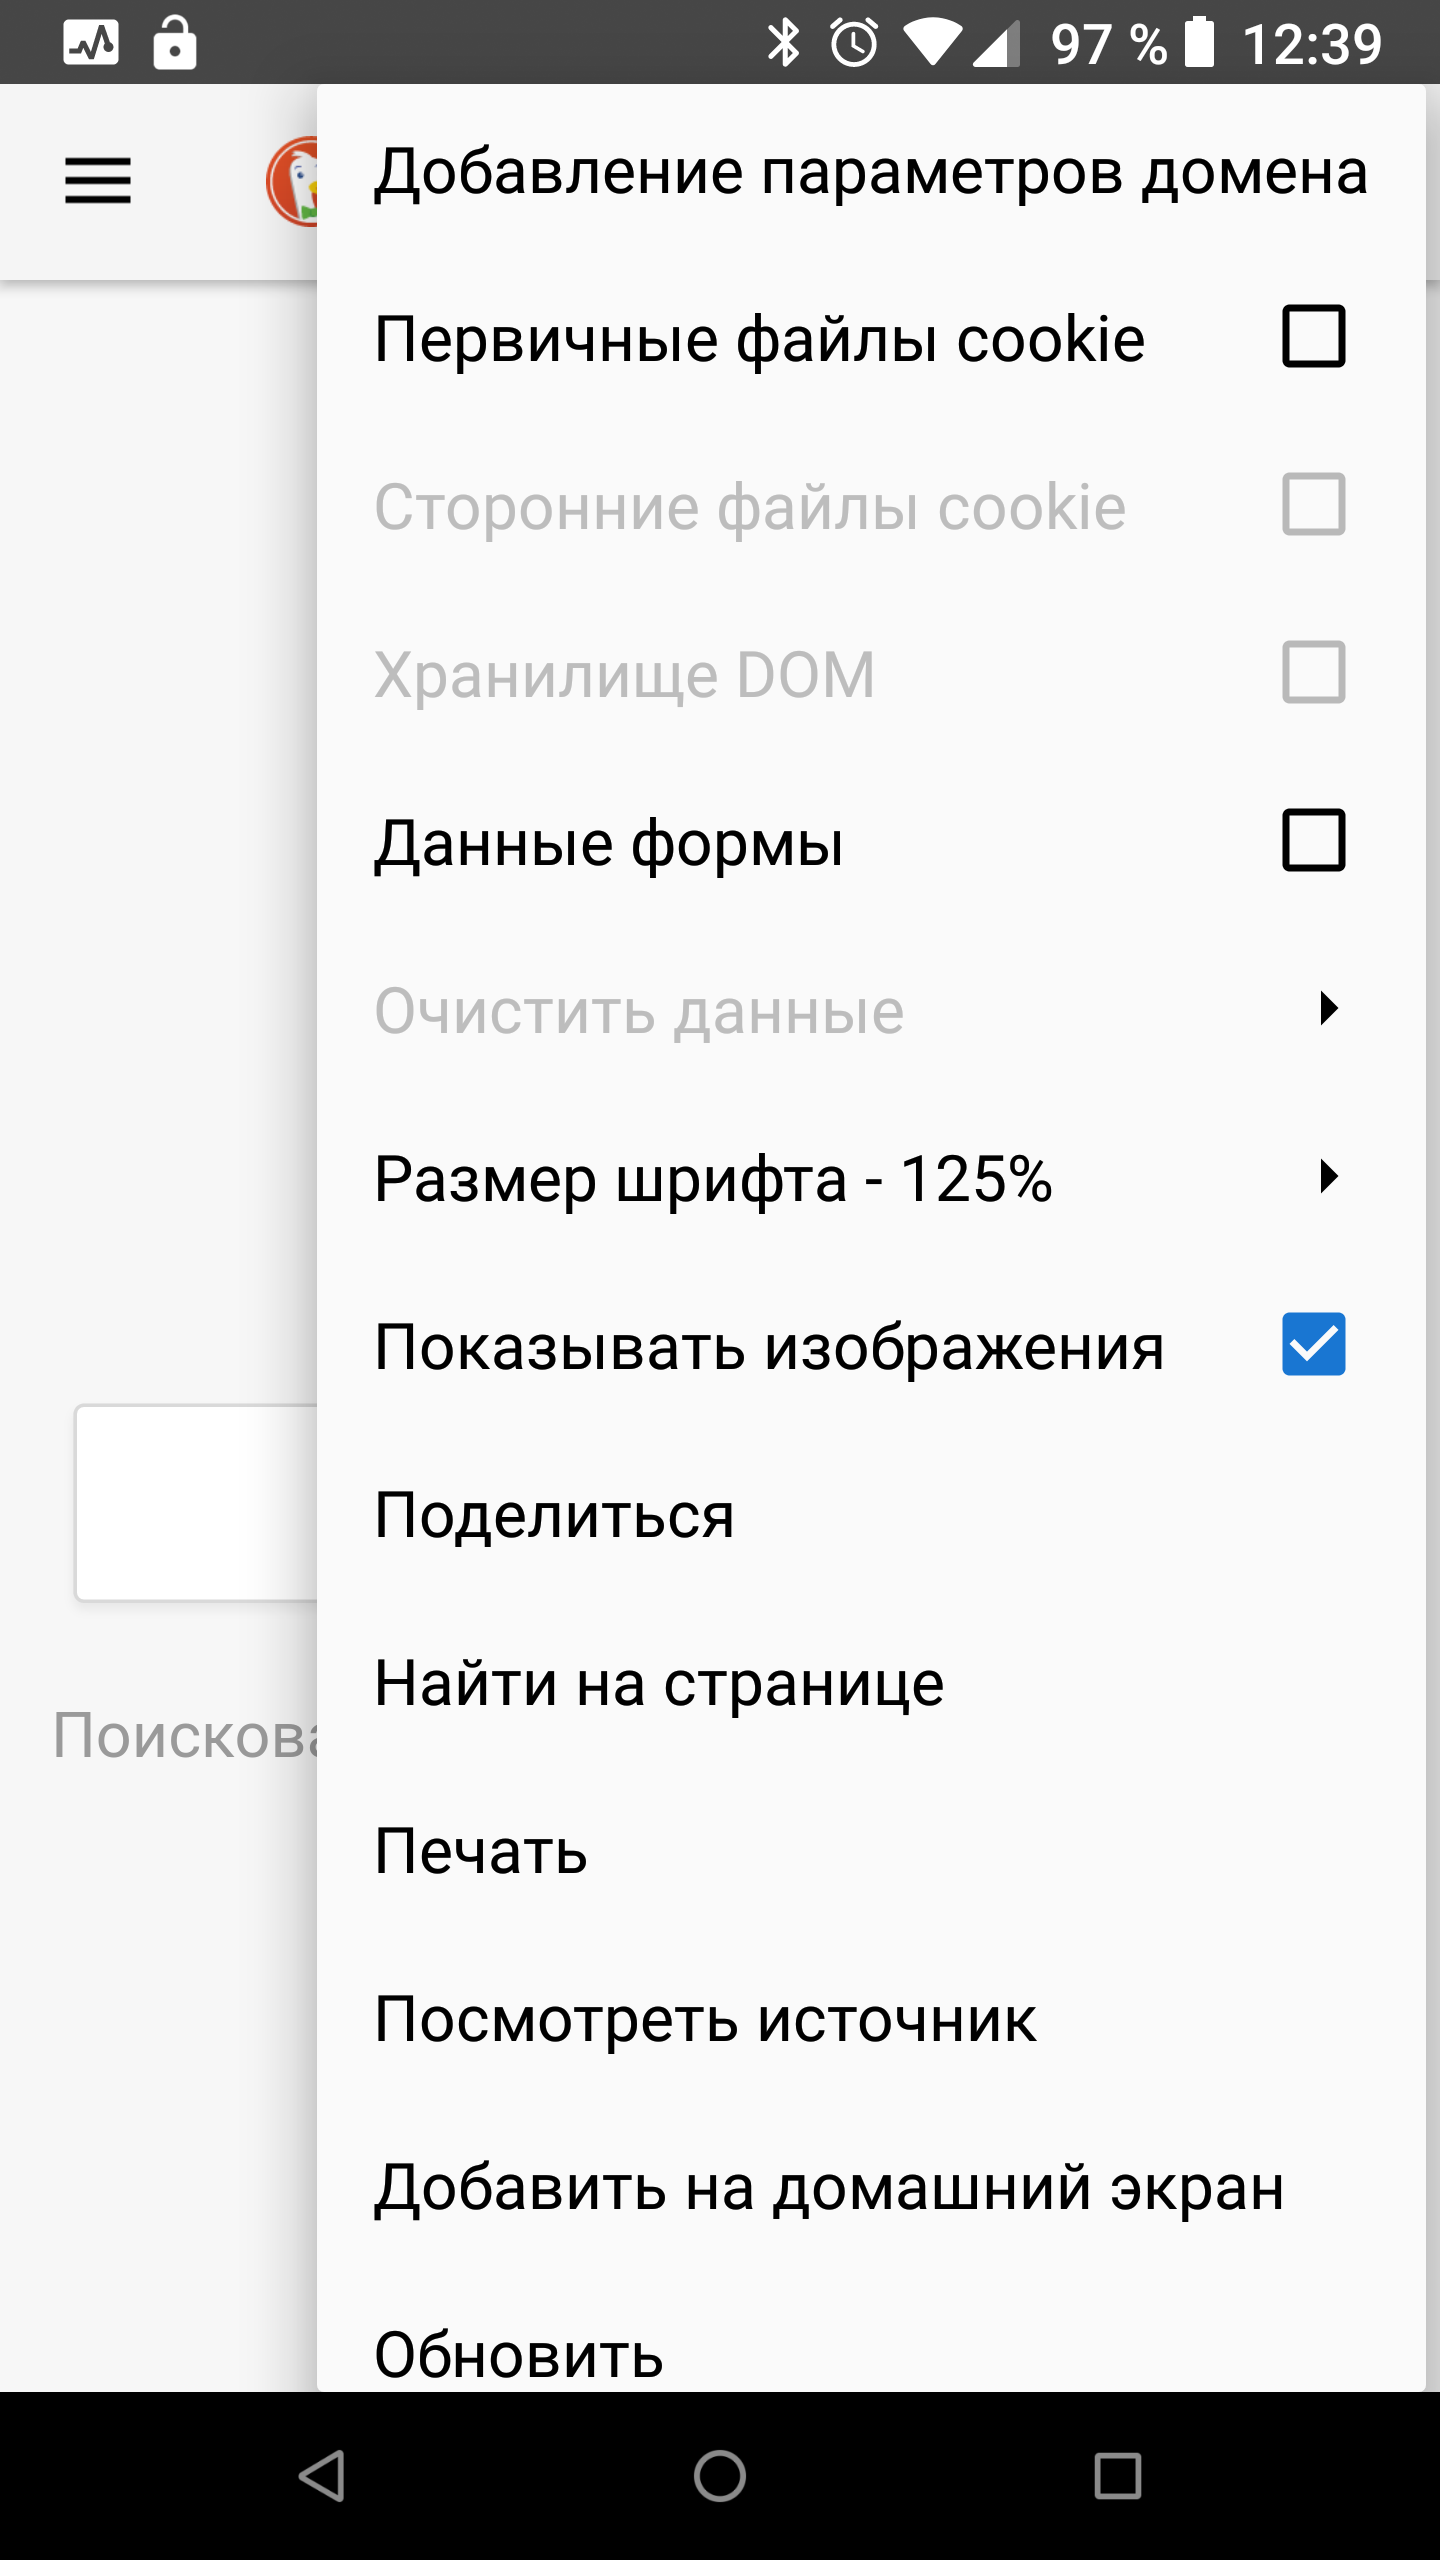 fastlane/metadata/android/ru-RU/images/phoneScreenshots/04-OptionsMenu.png